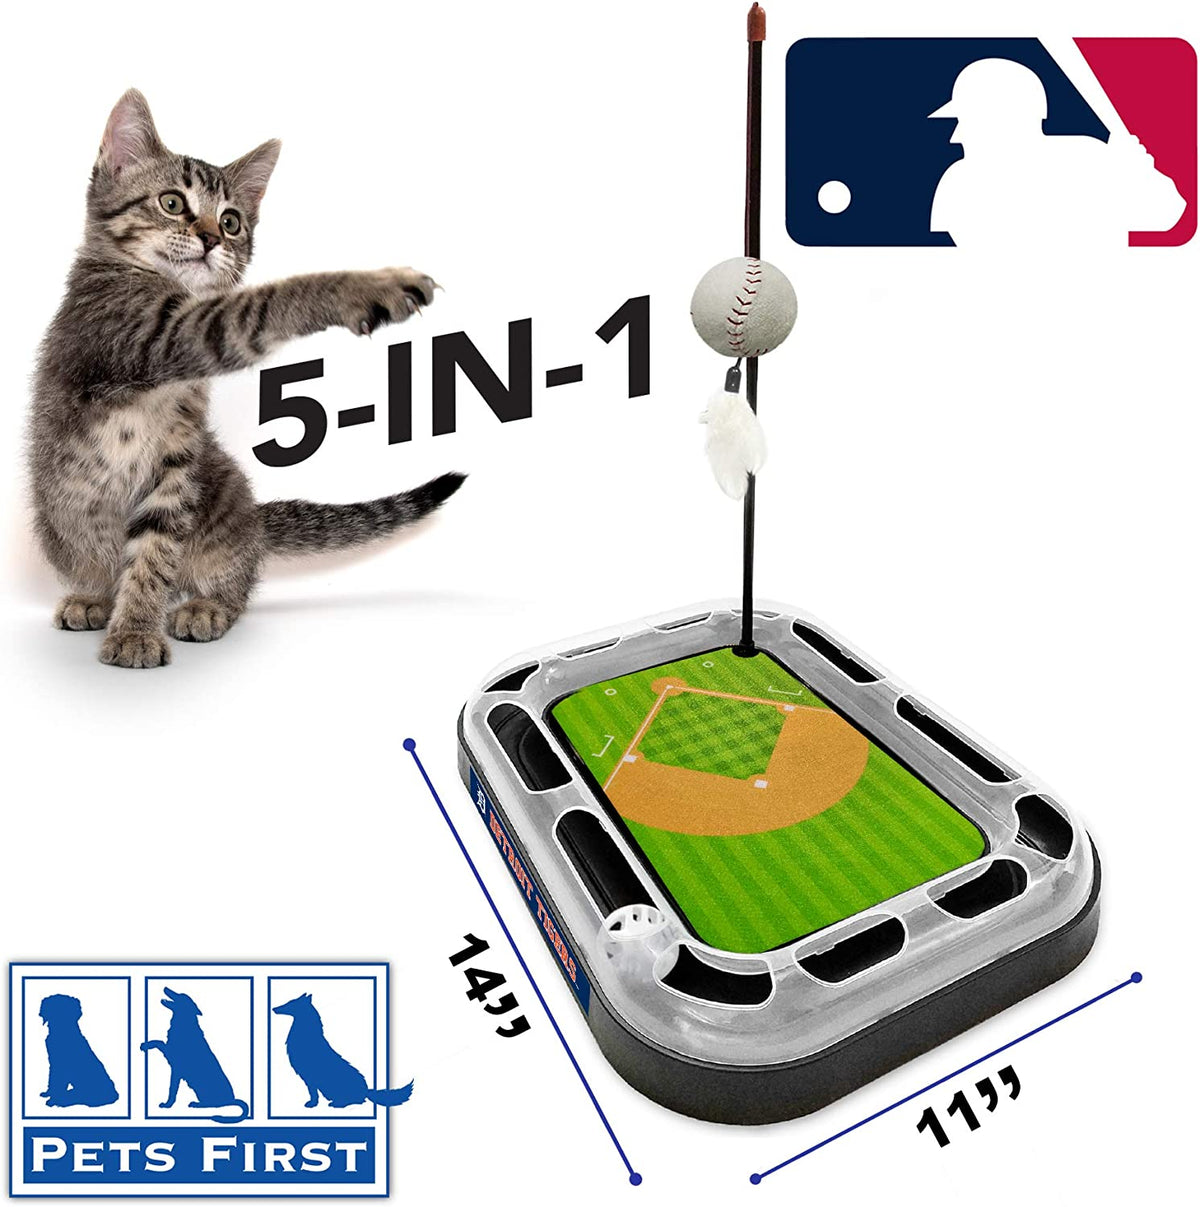 Detroit Tigers Baseball Cat Scratcher Toy